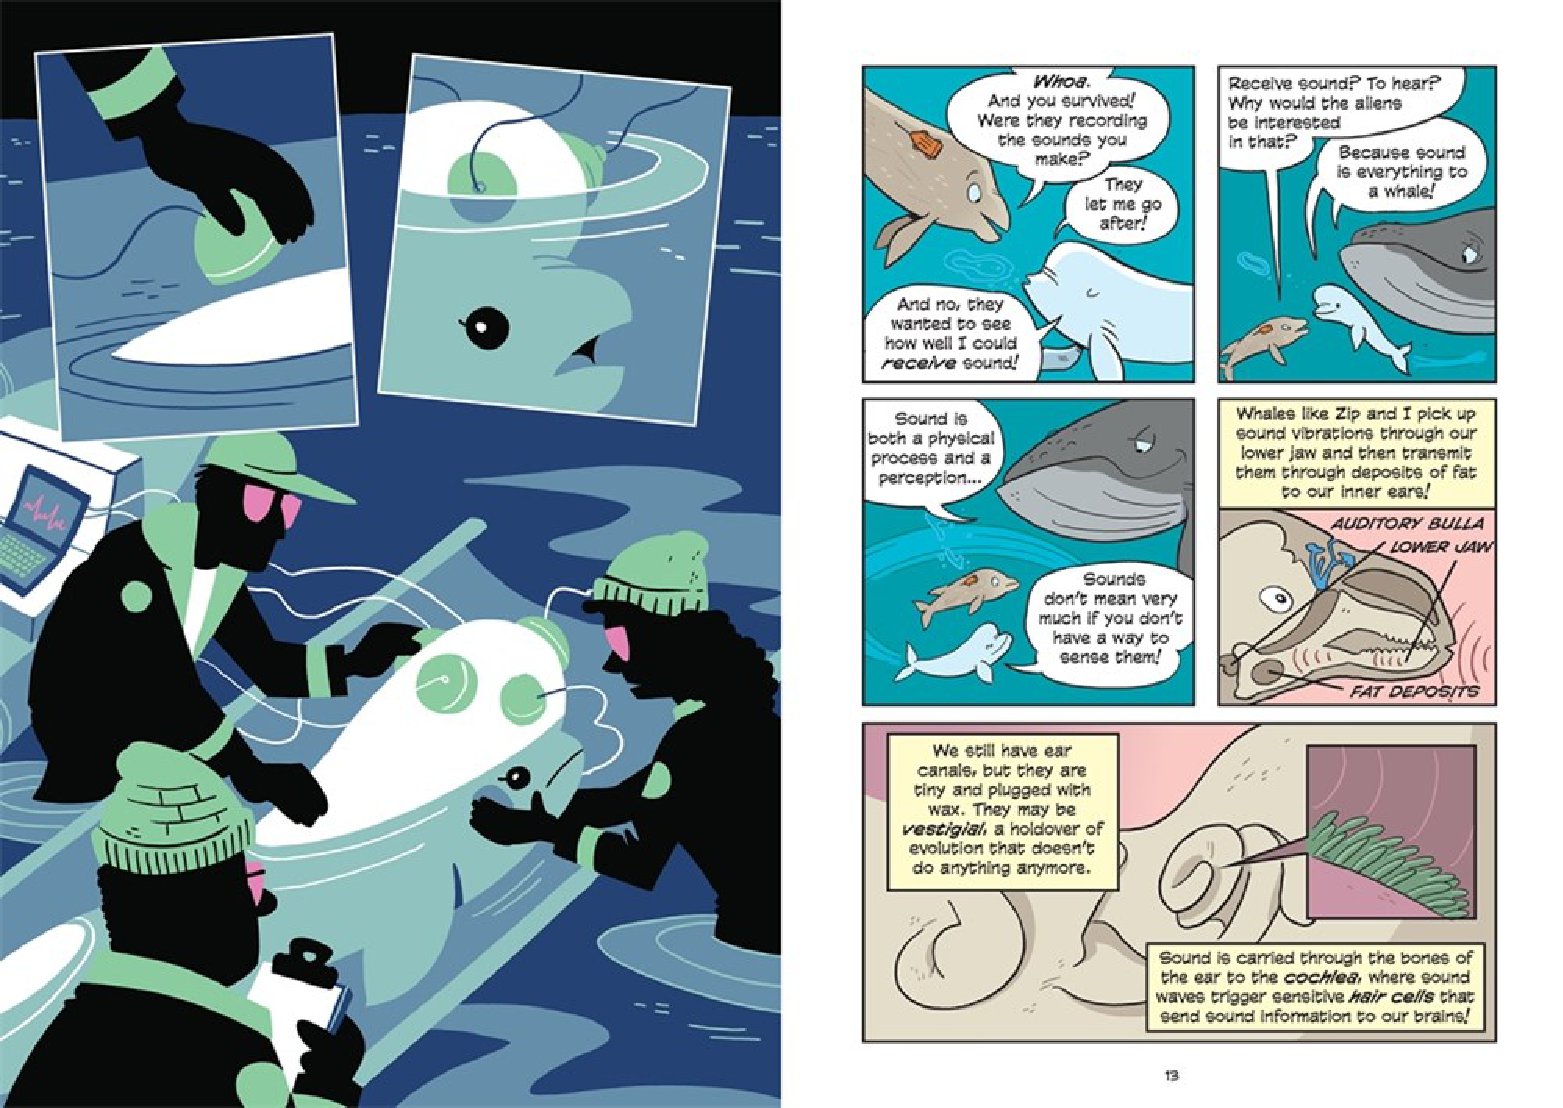 Science Comics: Whales